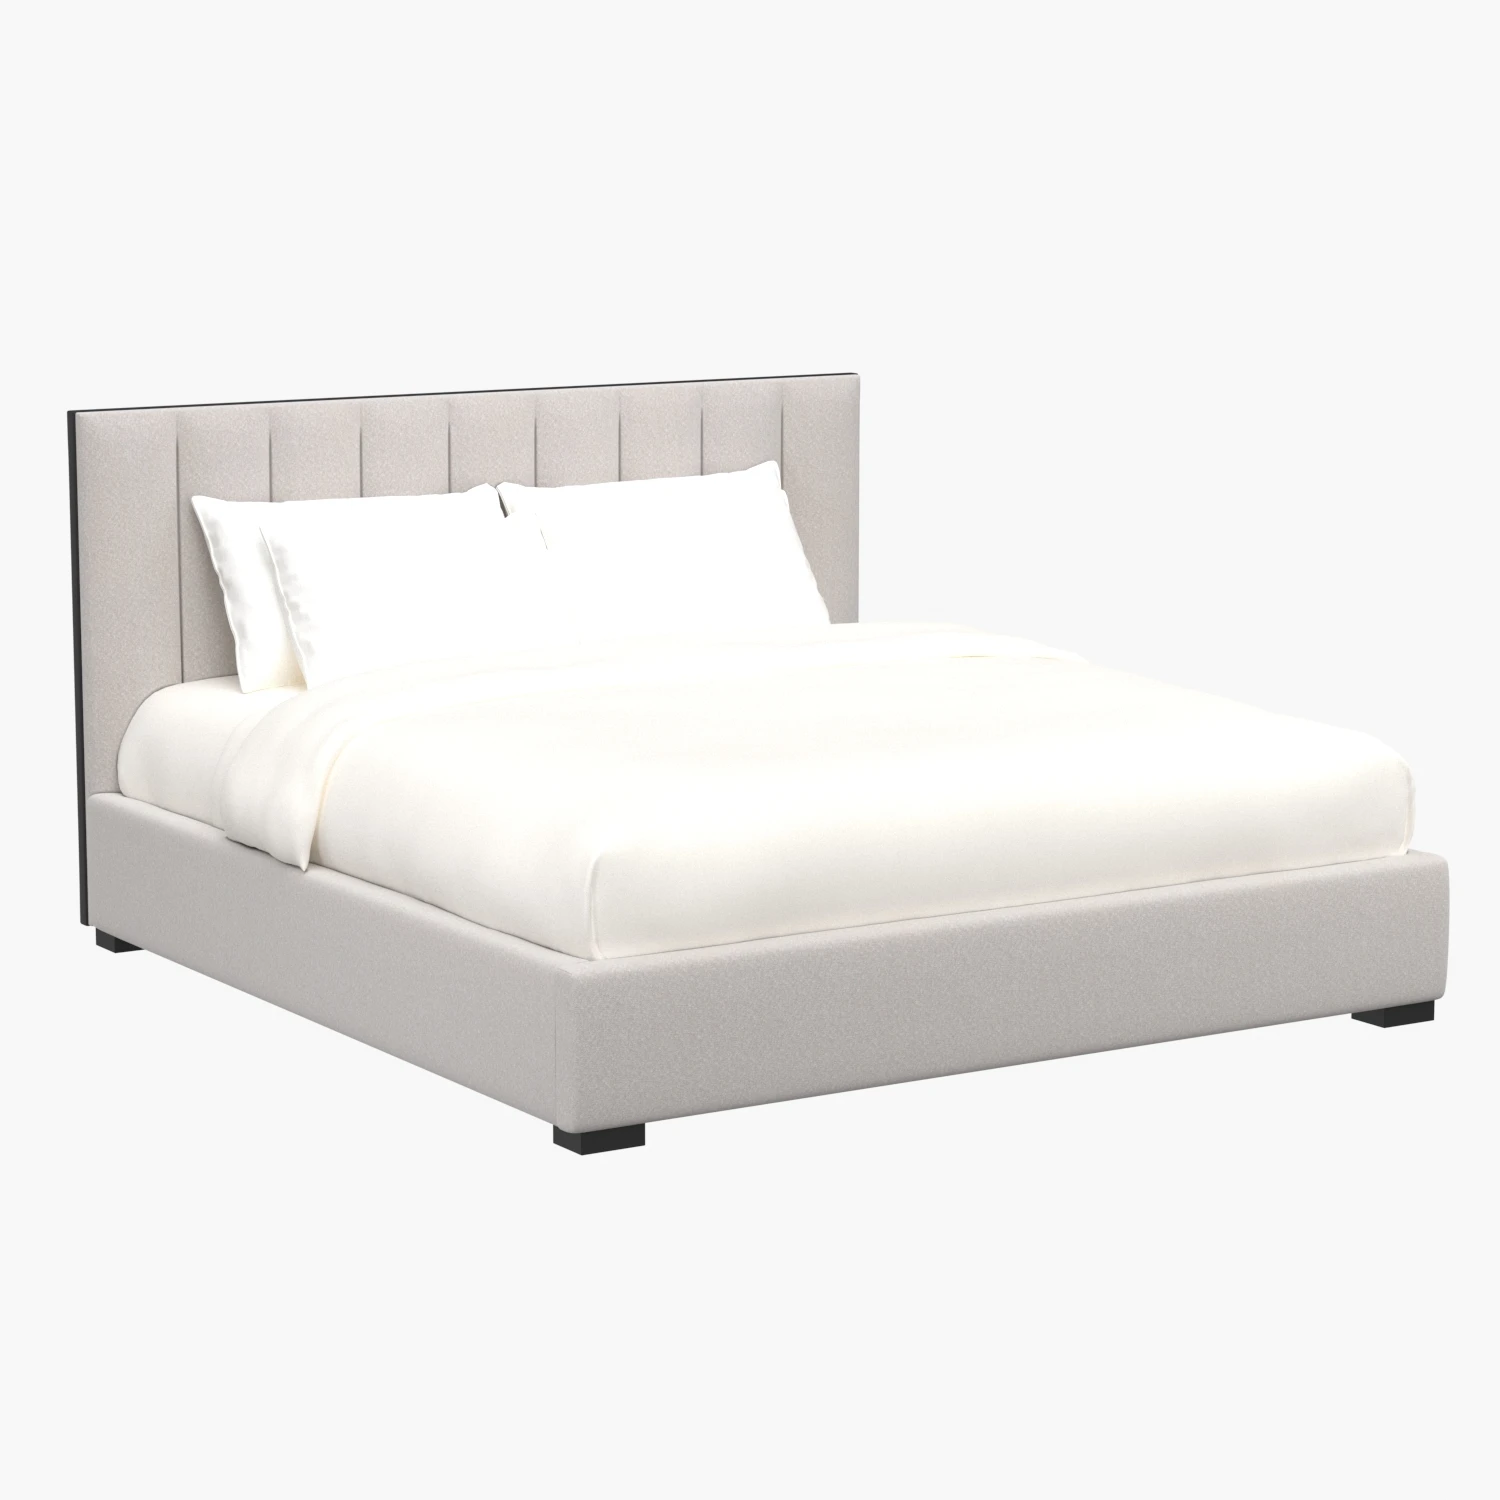 Nina Magon Magon King Bed 941220B 3D Model_06